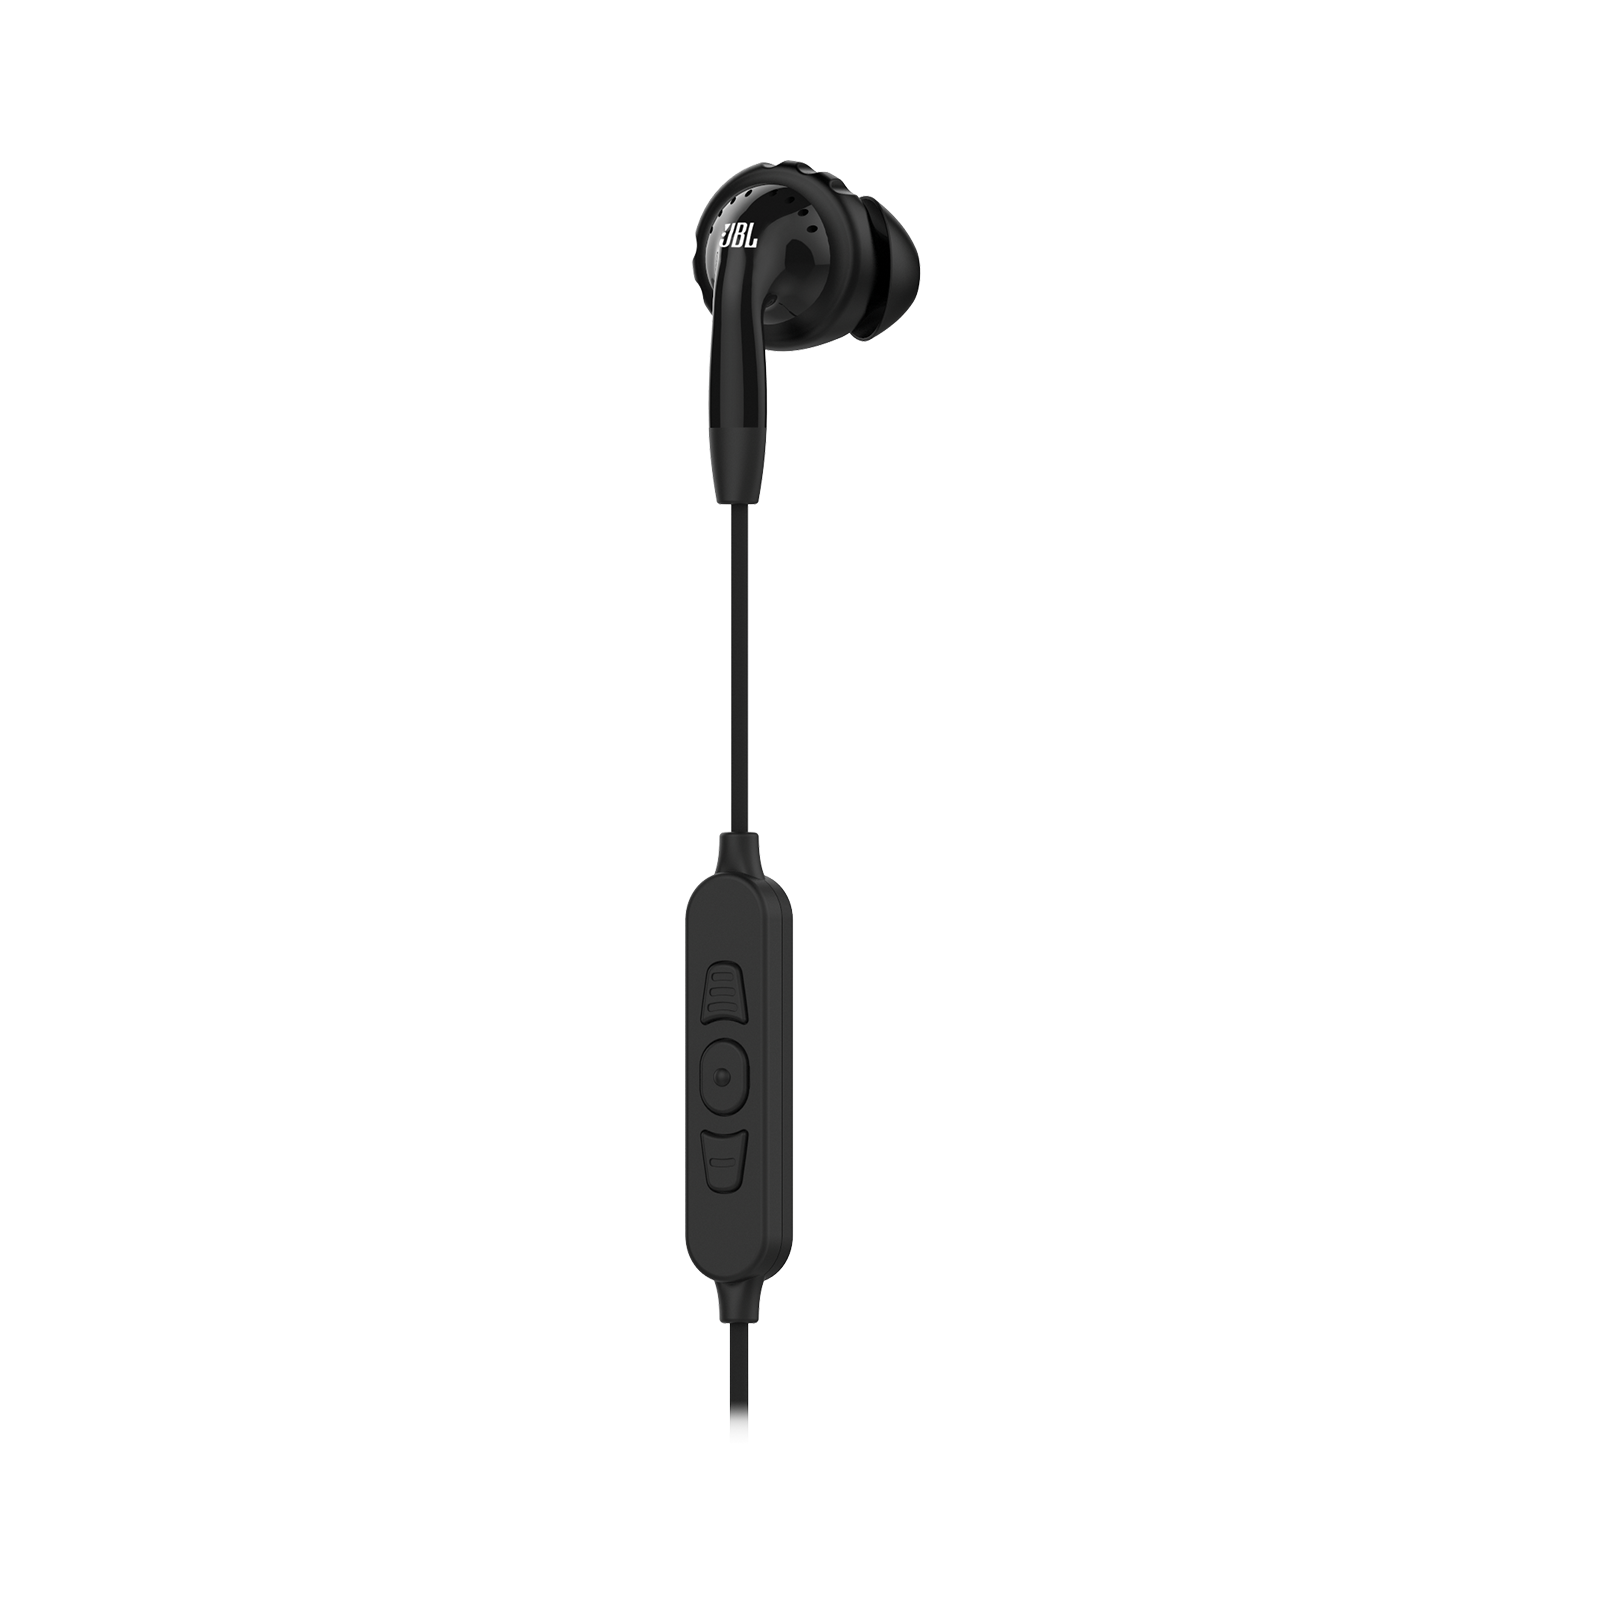 JBL Inspire 700 - Black - In-Ear Wireless Sport Headphones with charging case - Detailshot 1